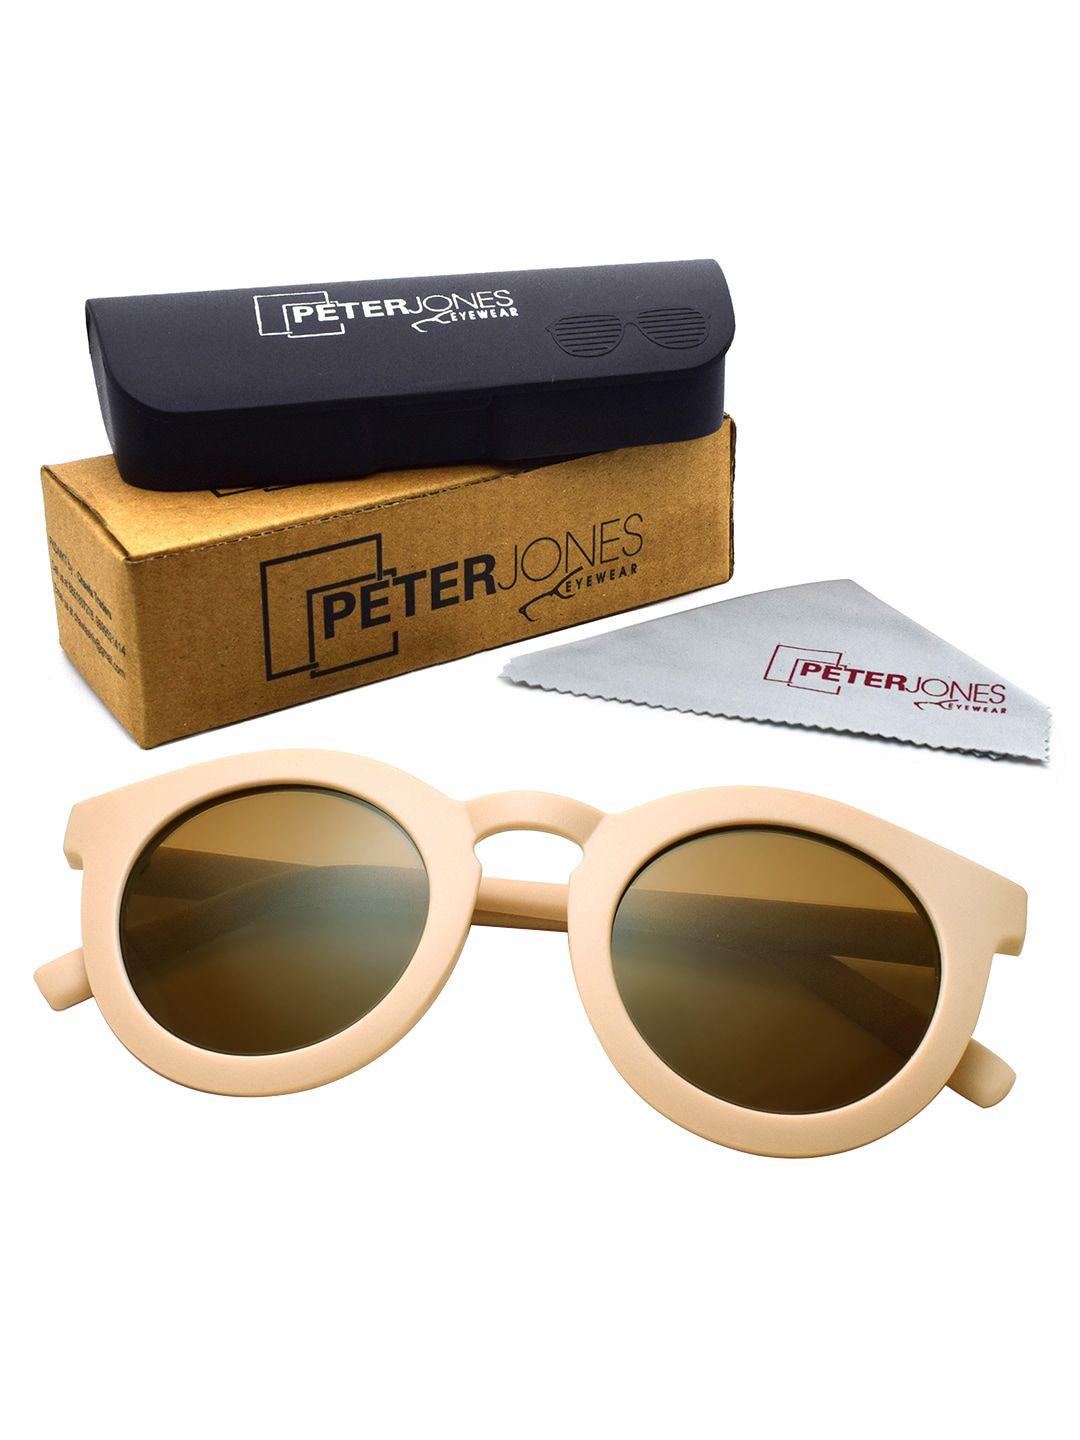 peter jones eyewear round sunglasses with uv protected lens 13052cr_s-brown